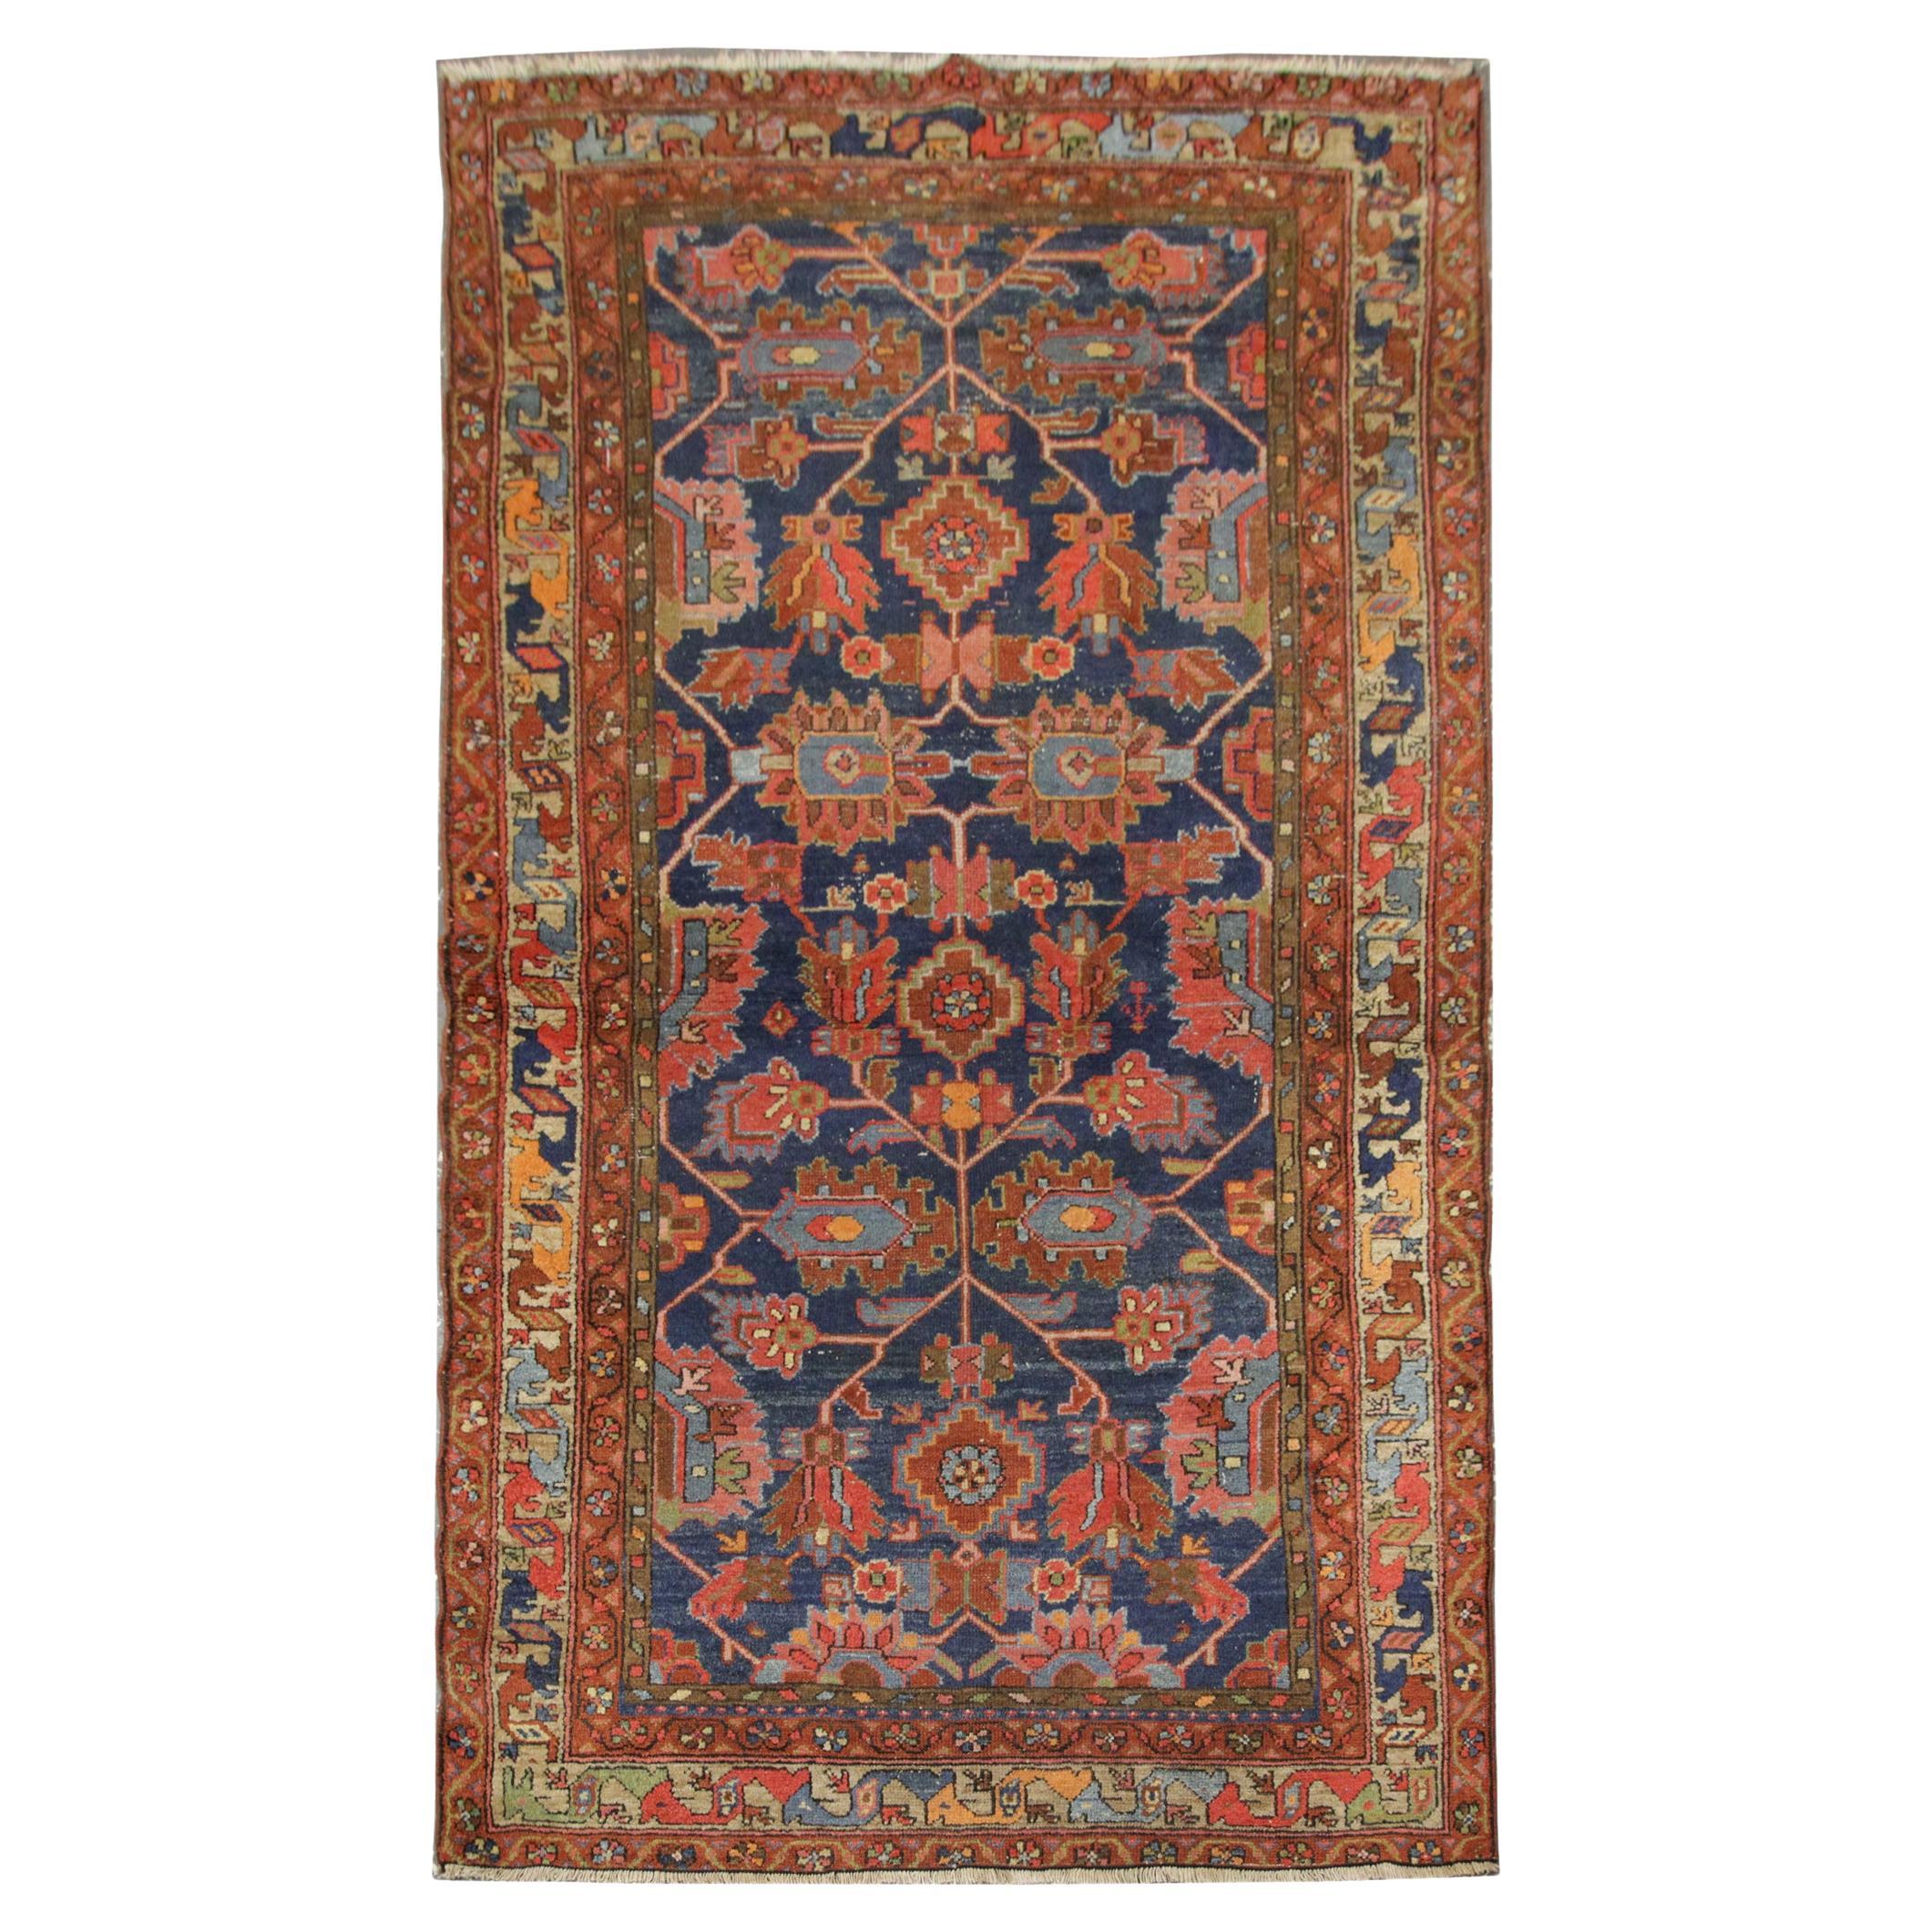 Antique Caucasian Carpet Handmade All Over Design Living Room Rug CHR79